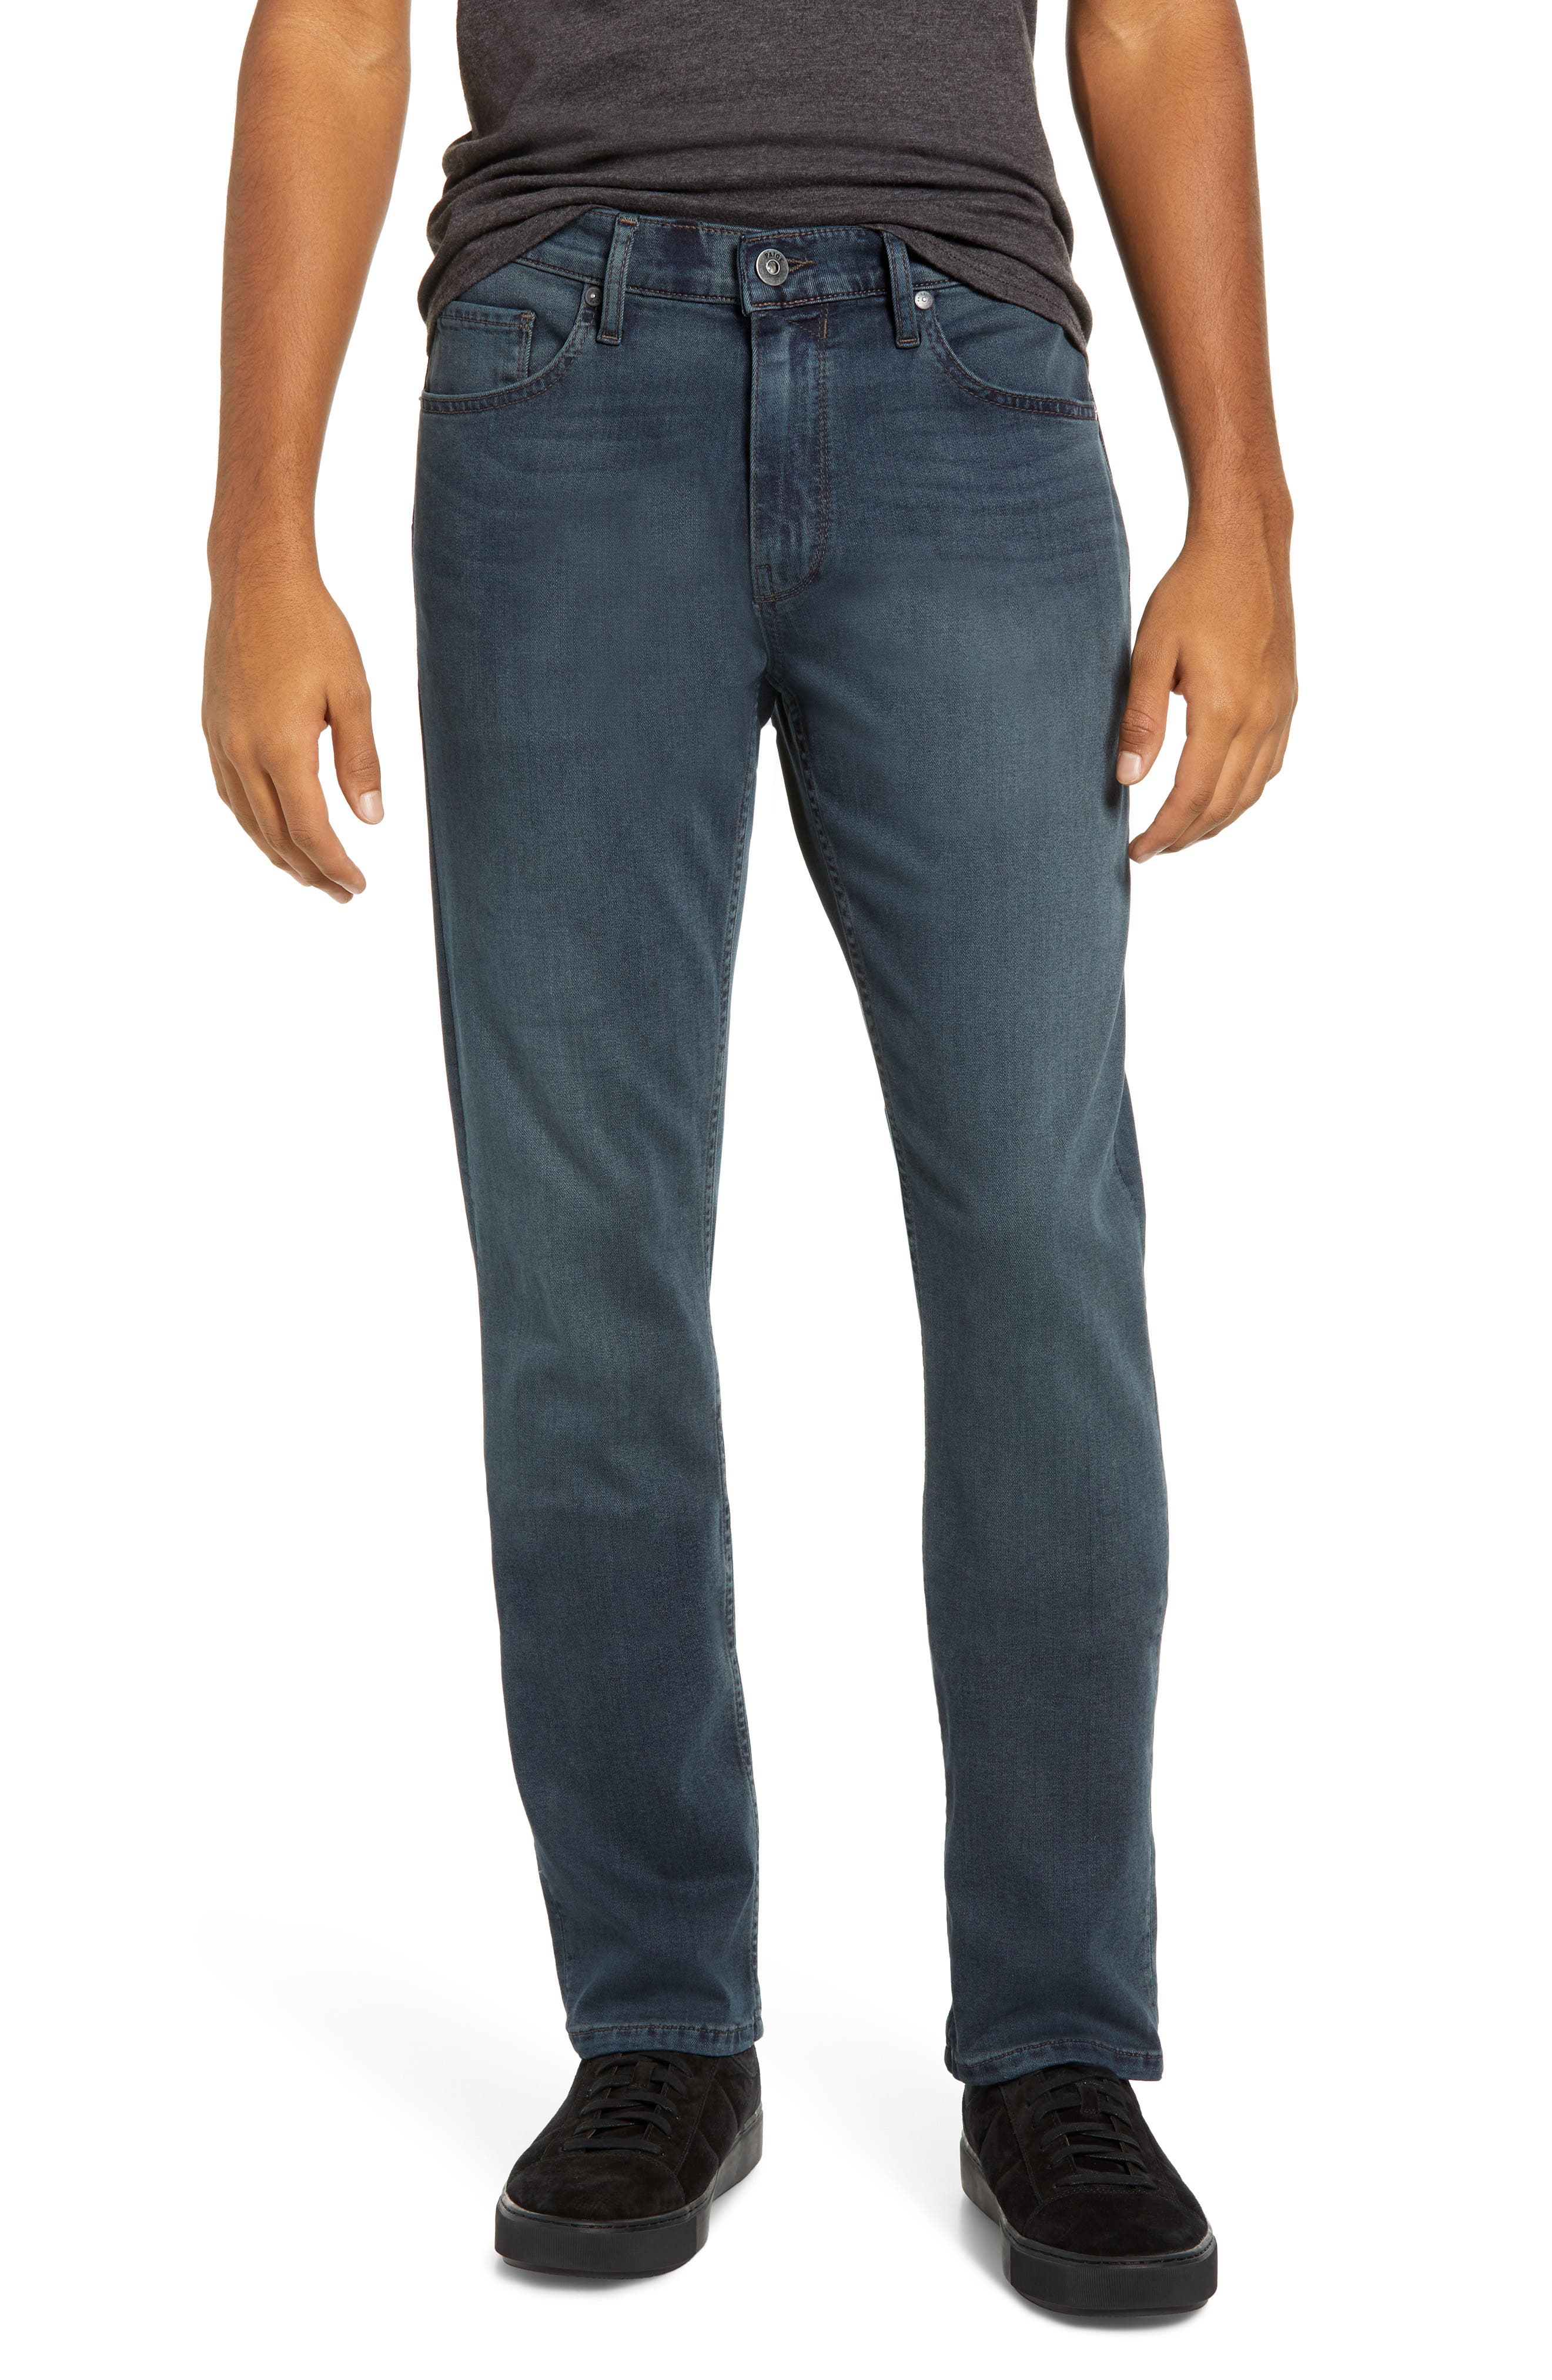 paige federal jeans mens